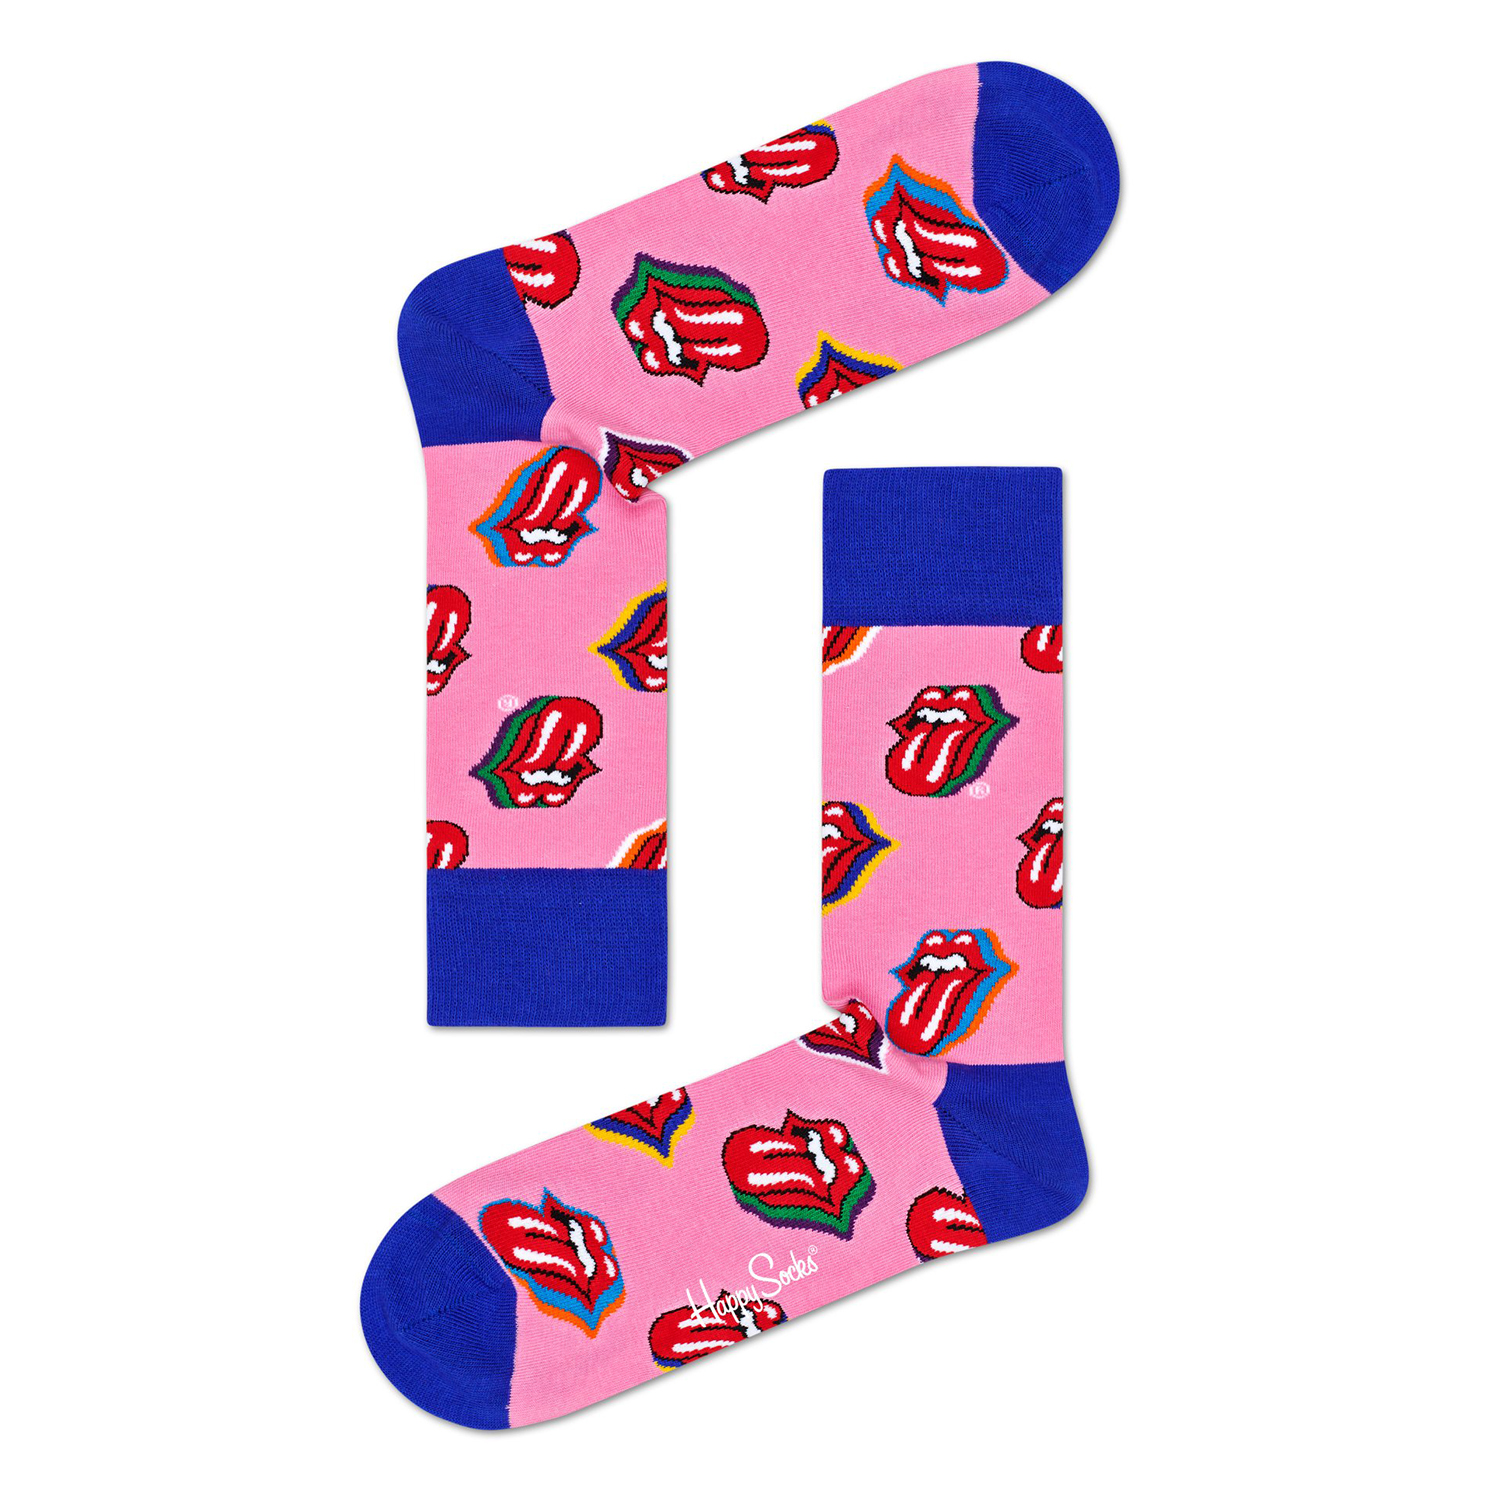 Happy Socks - The Rolling Stones Candy Kiss Sock - YaYa21